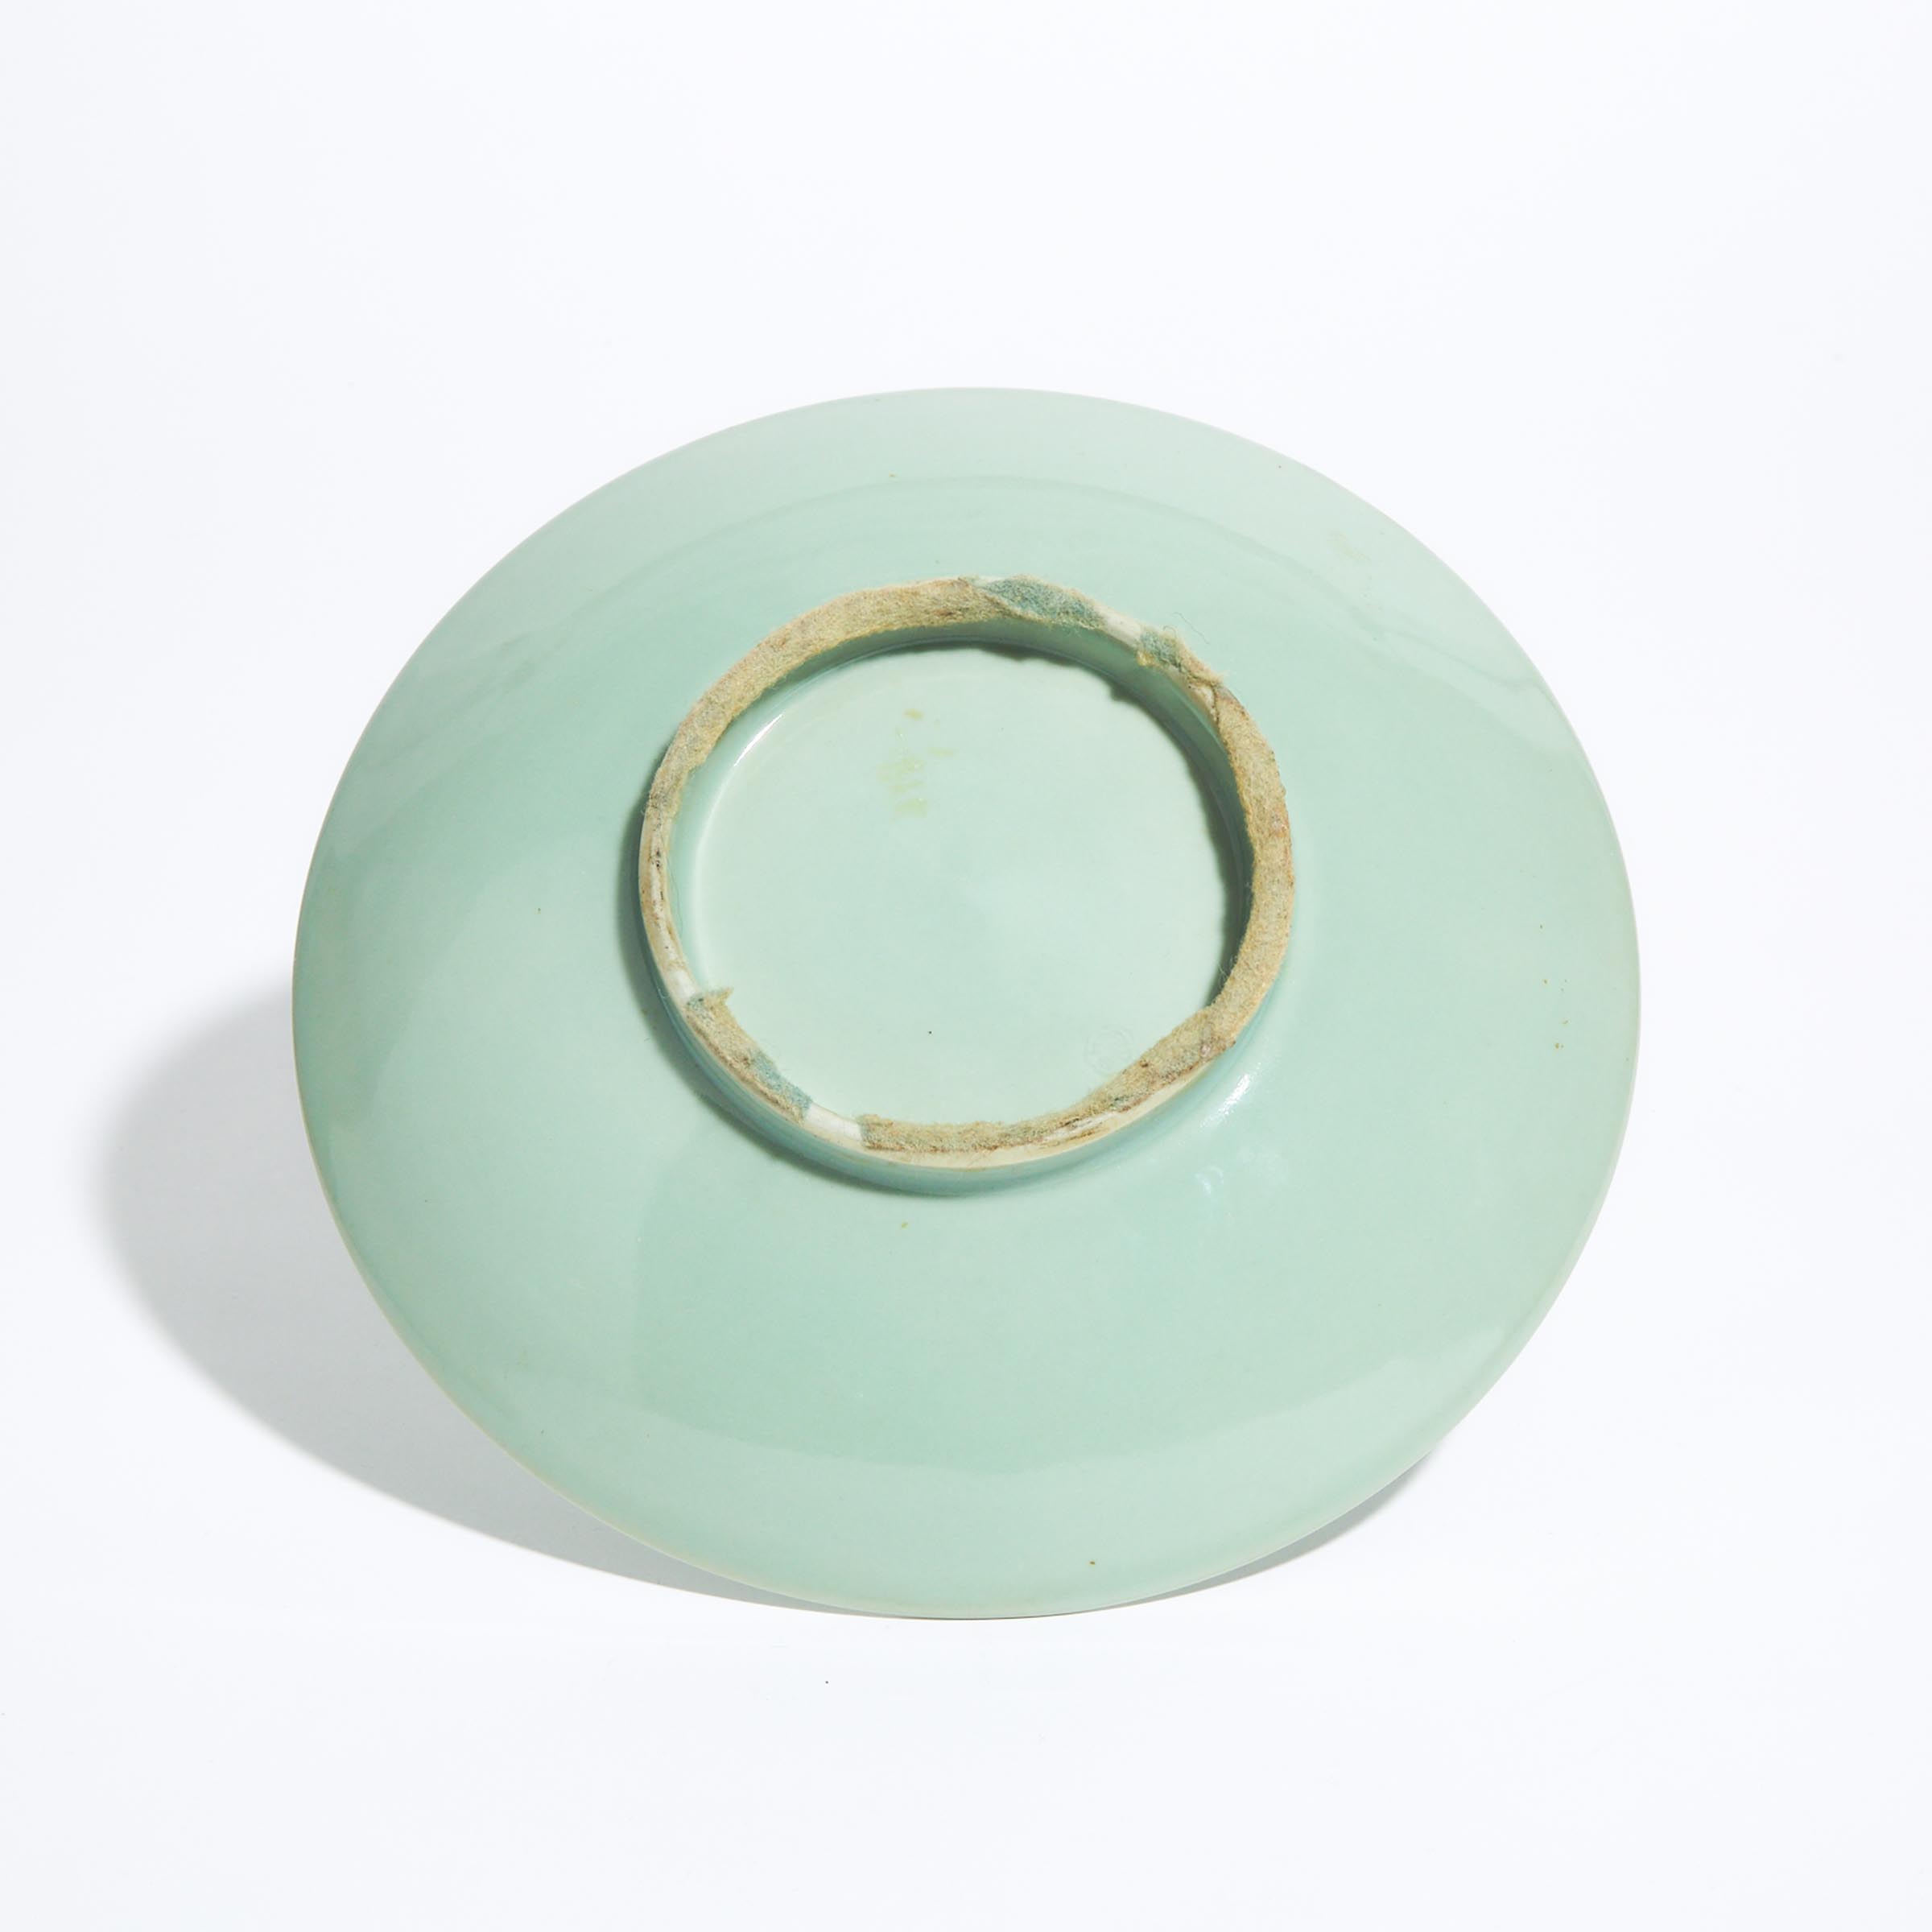 A Celadon-Glazed Slip-Decorated Dish